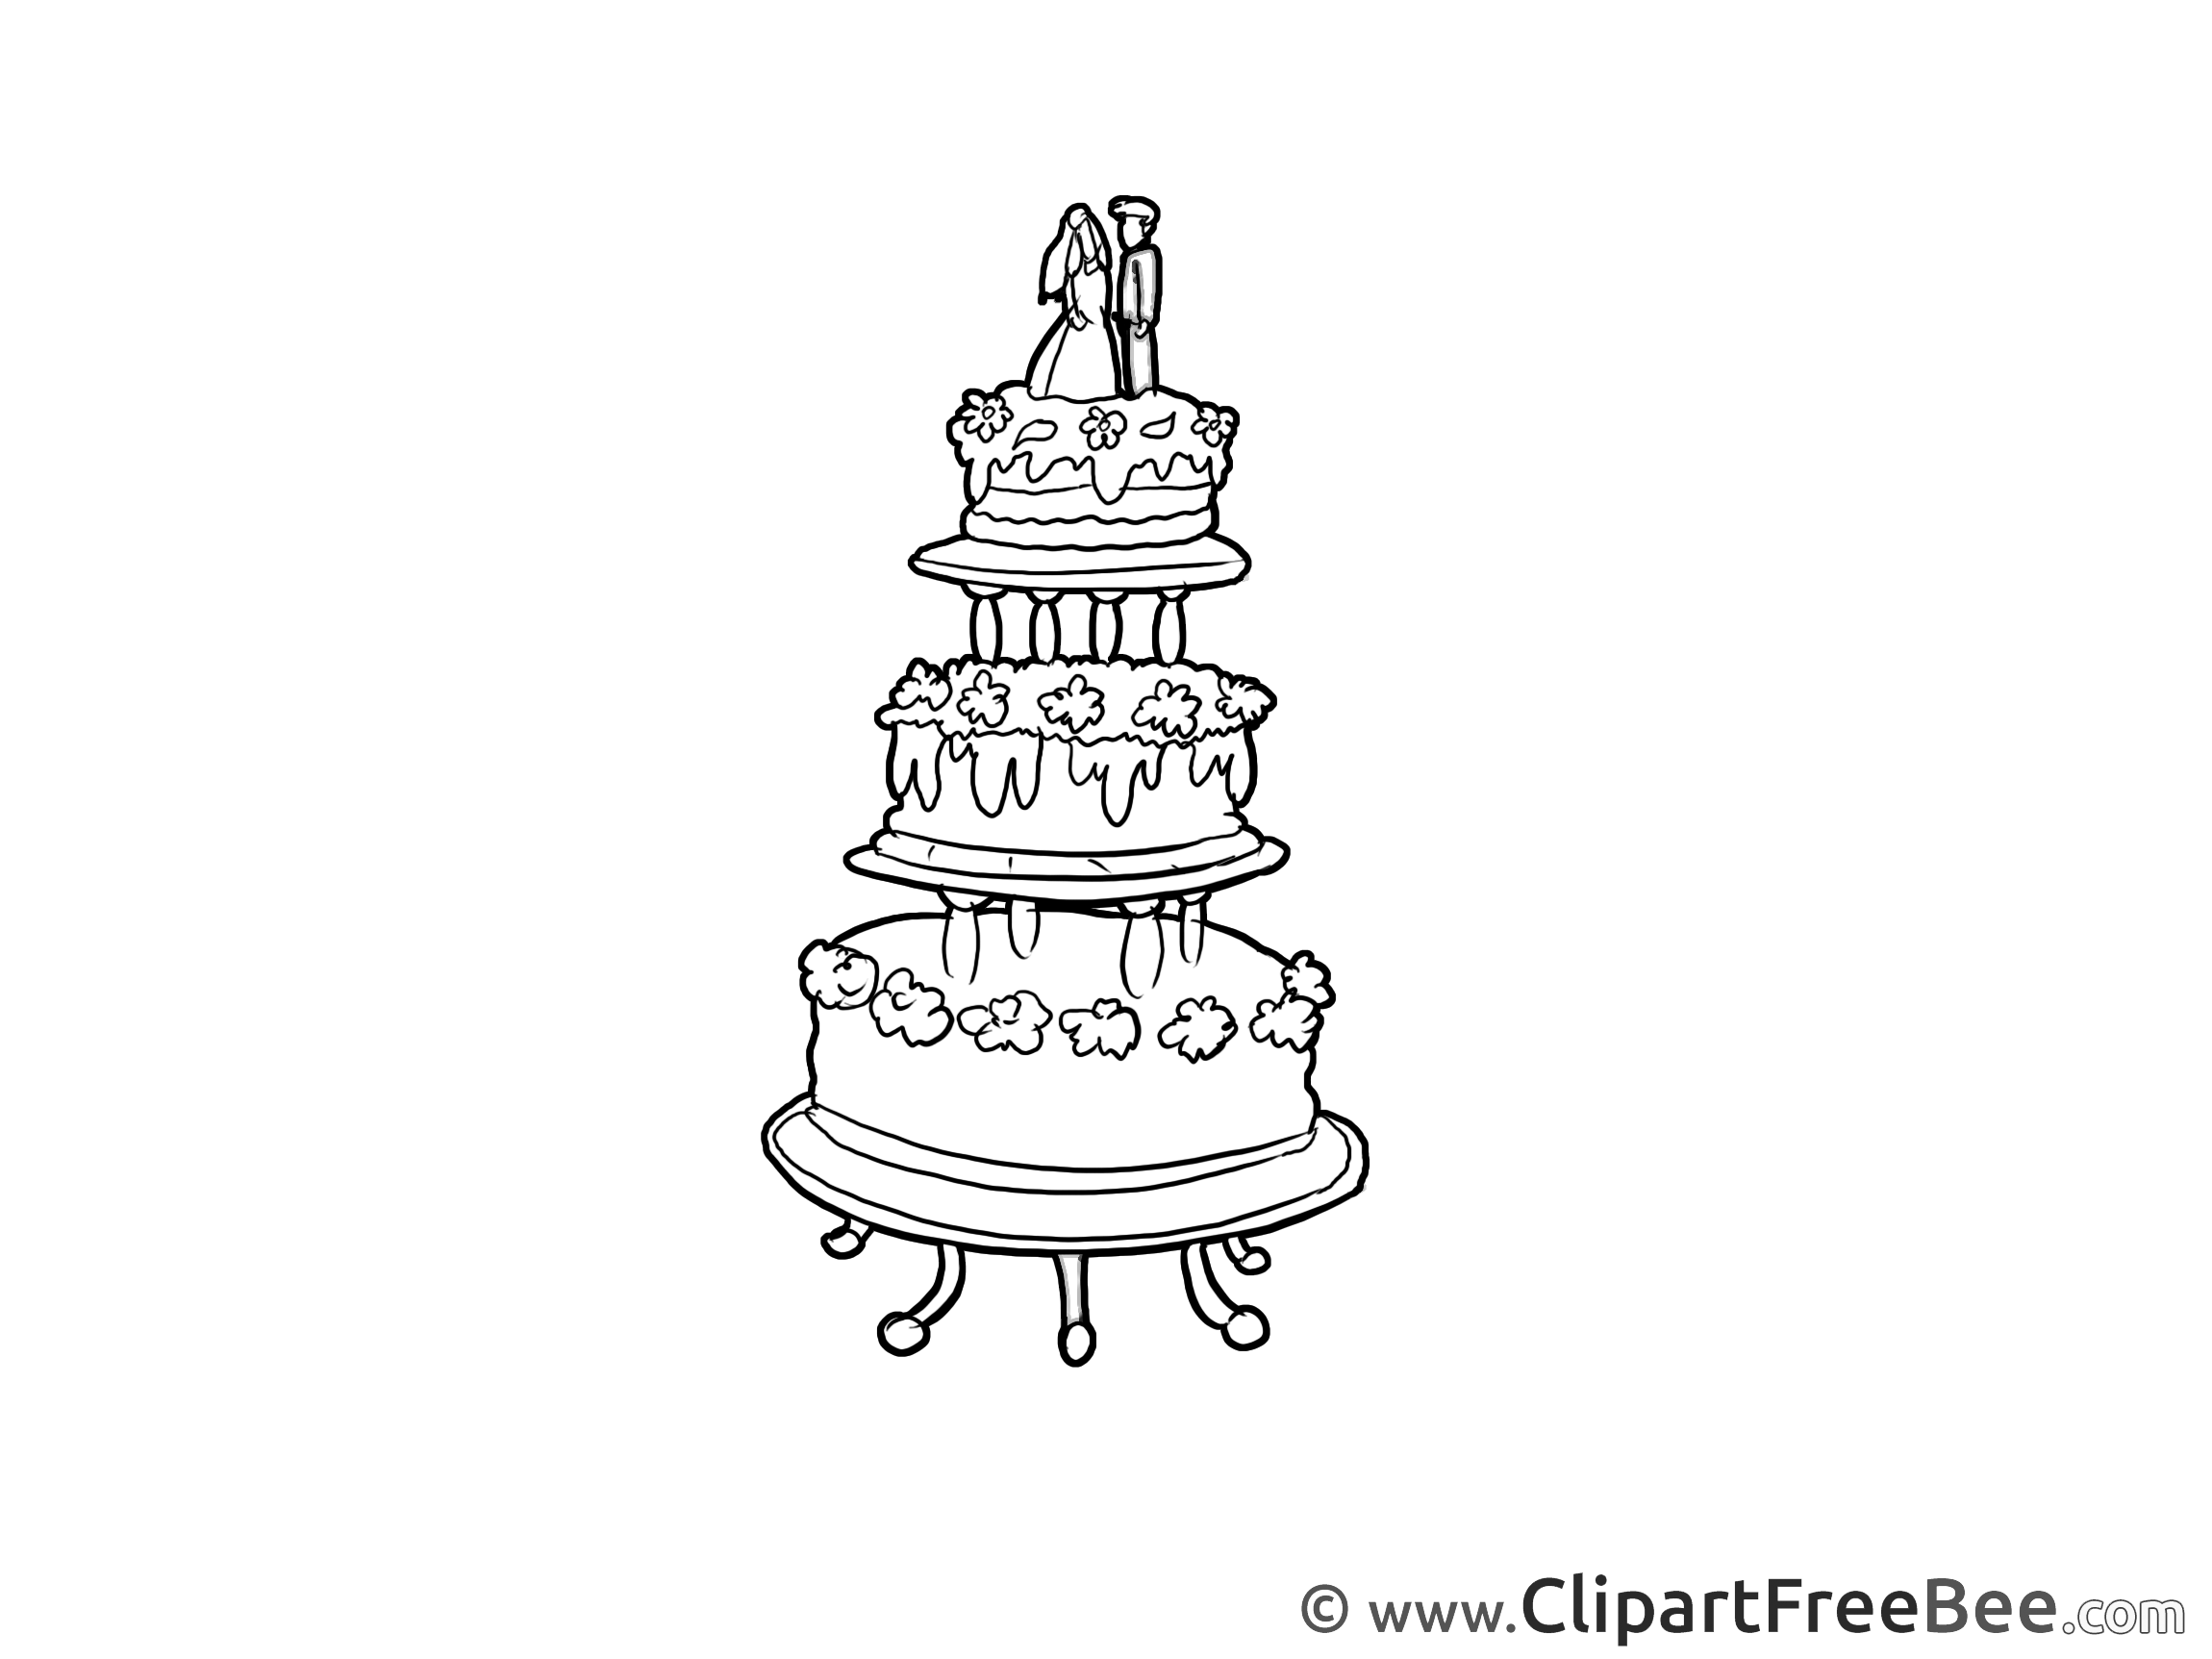 Cake Wedding Illustrations for free